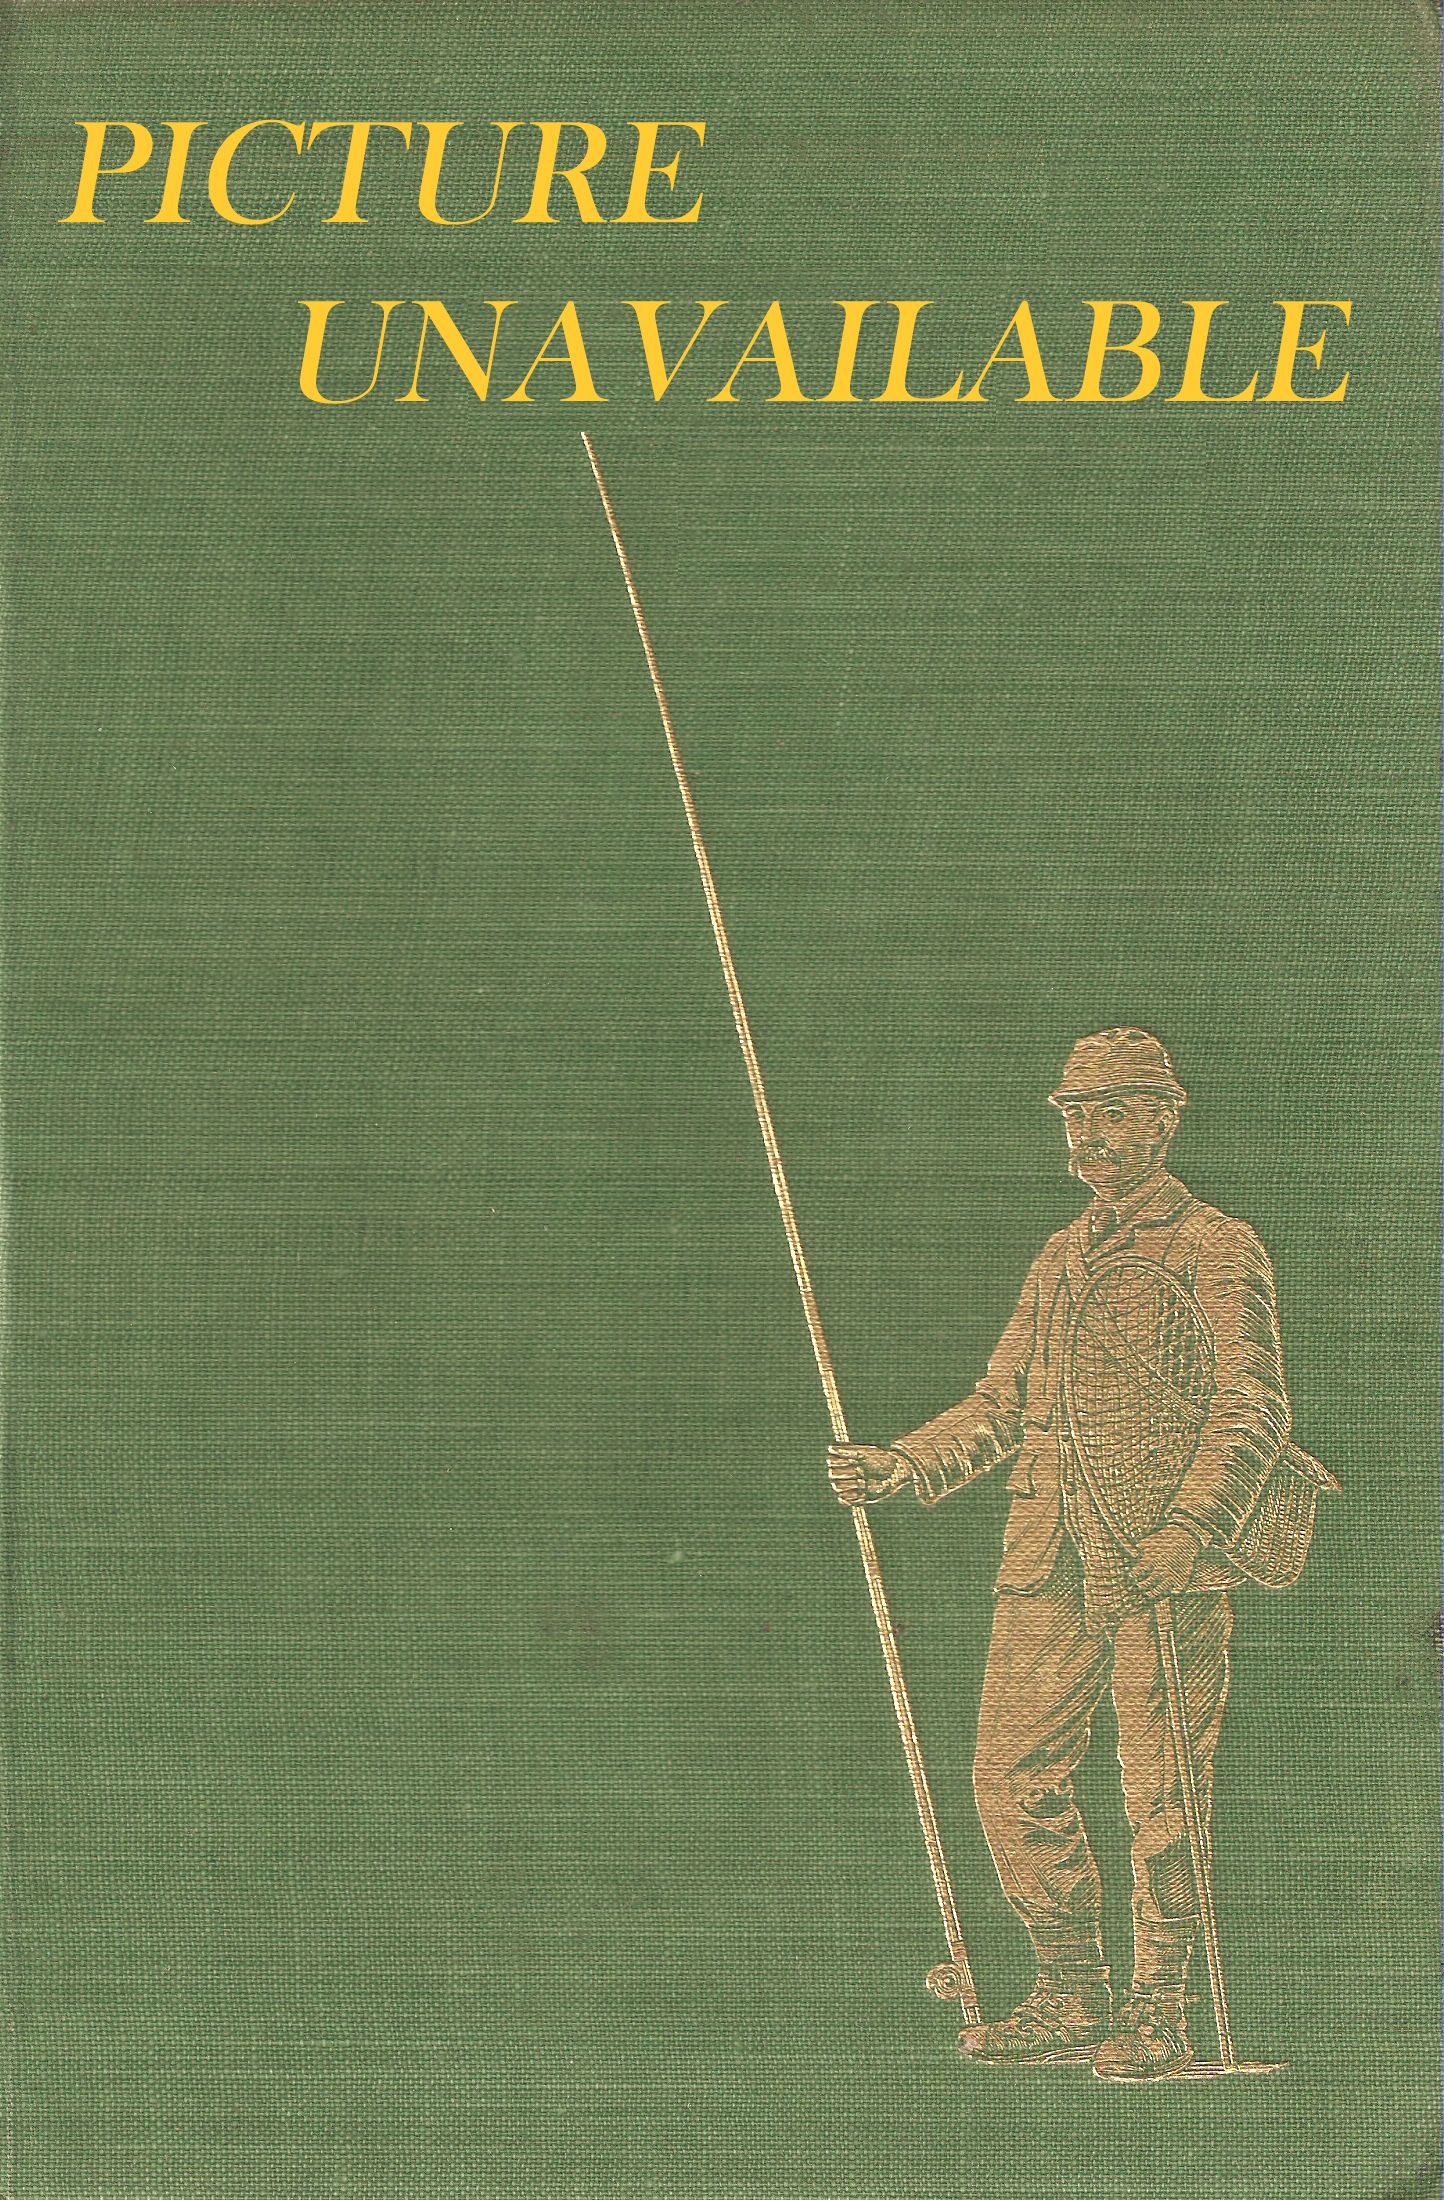 CREEL: A FISHING MAGAZINE. Volume 3, number 3. September 1965.